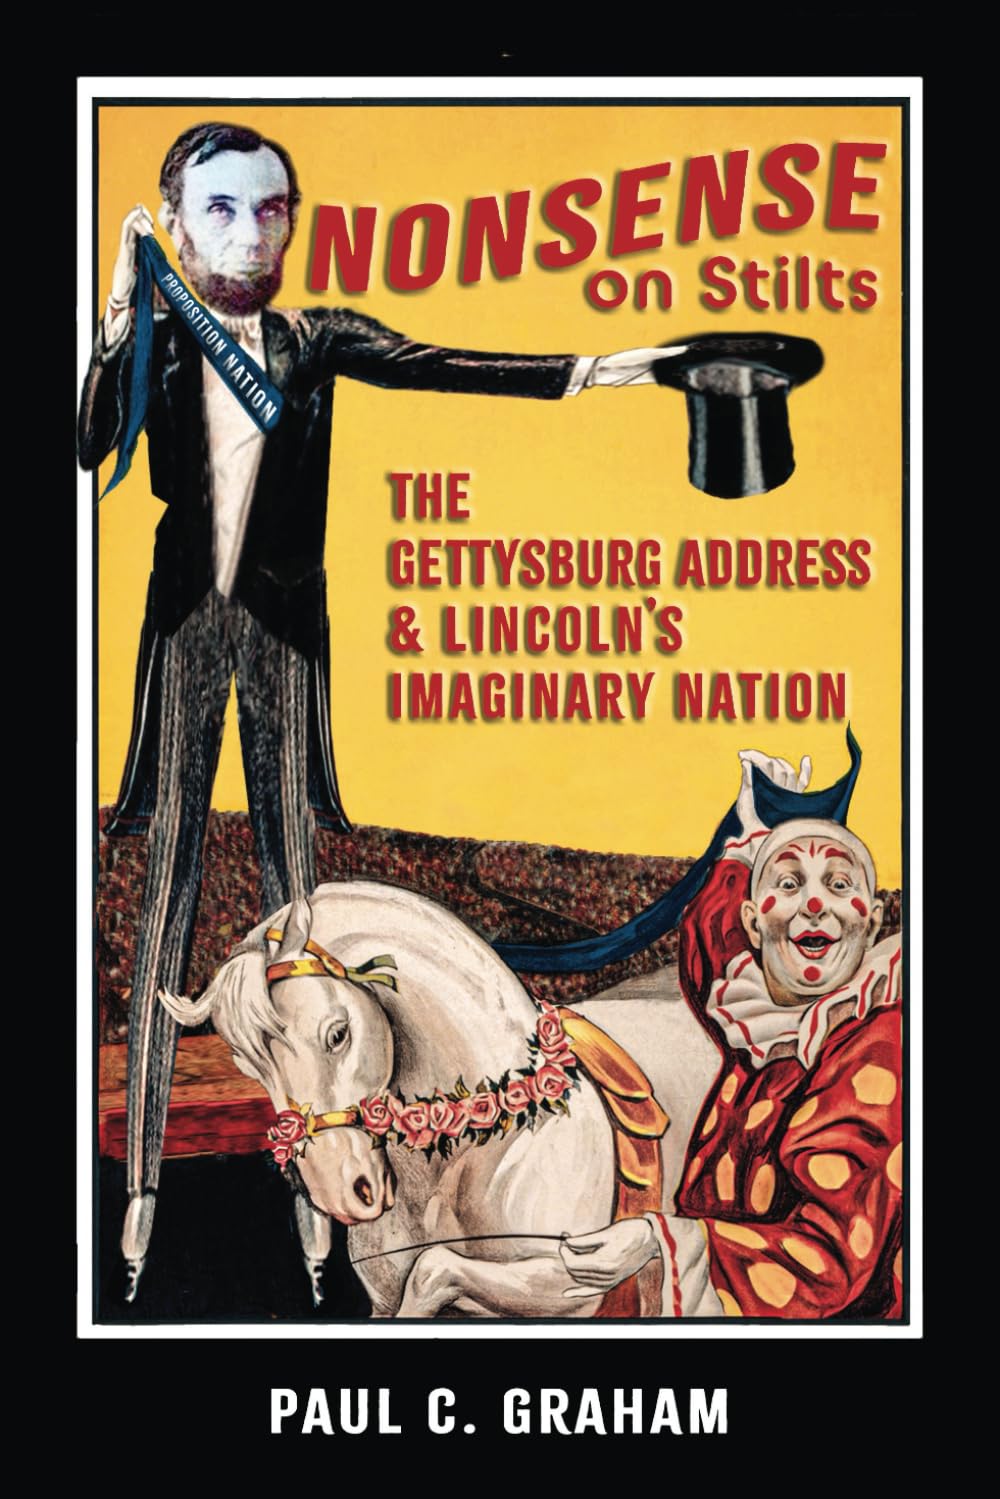 Nonsense on Stilts: The Gettysburg Address & Lincoln's Imaginary Nation